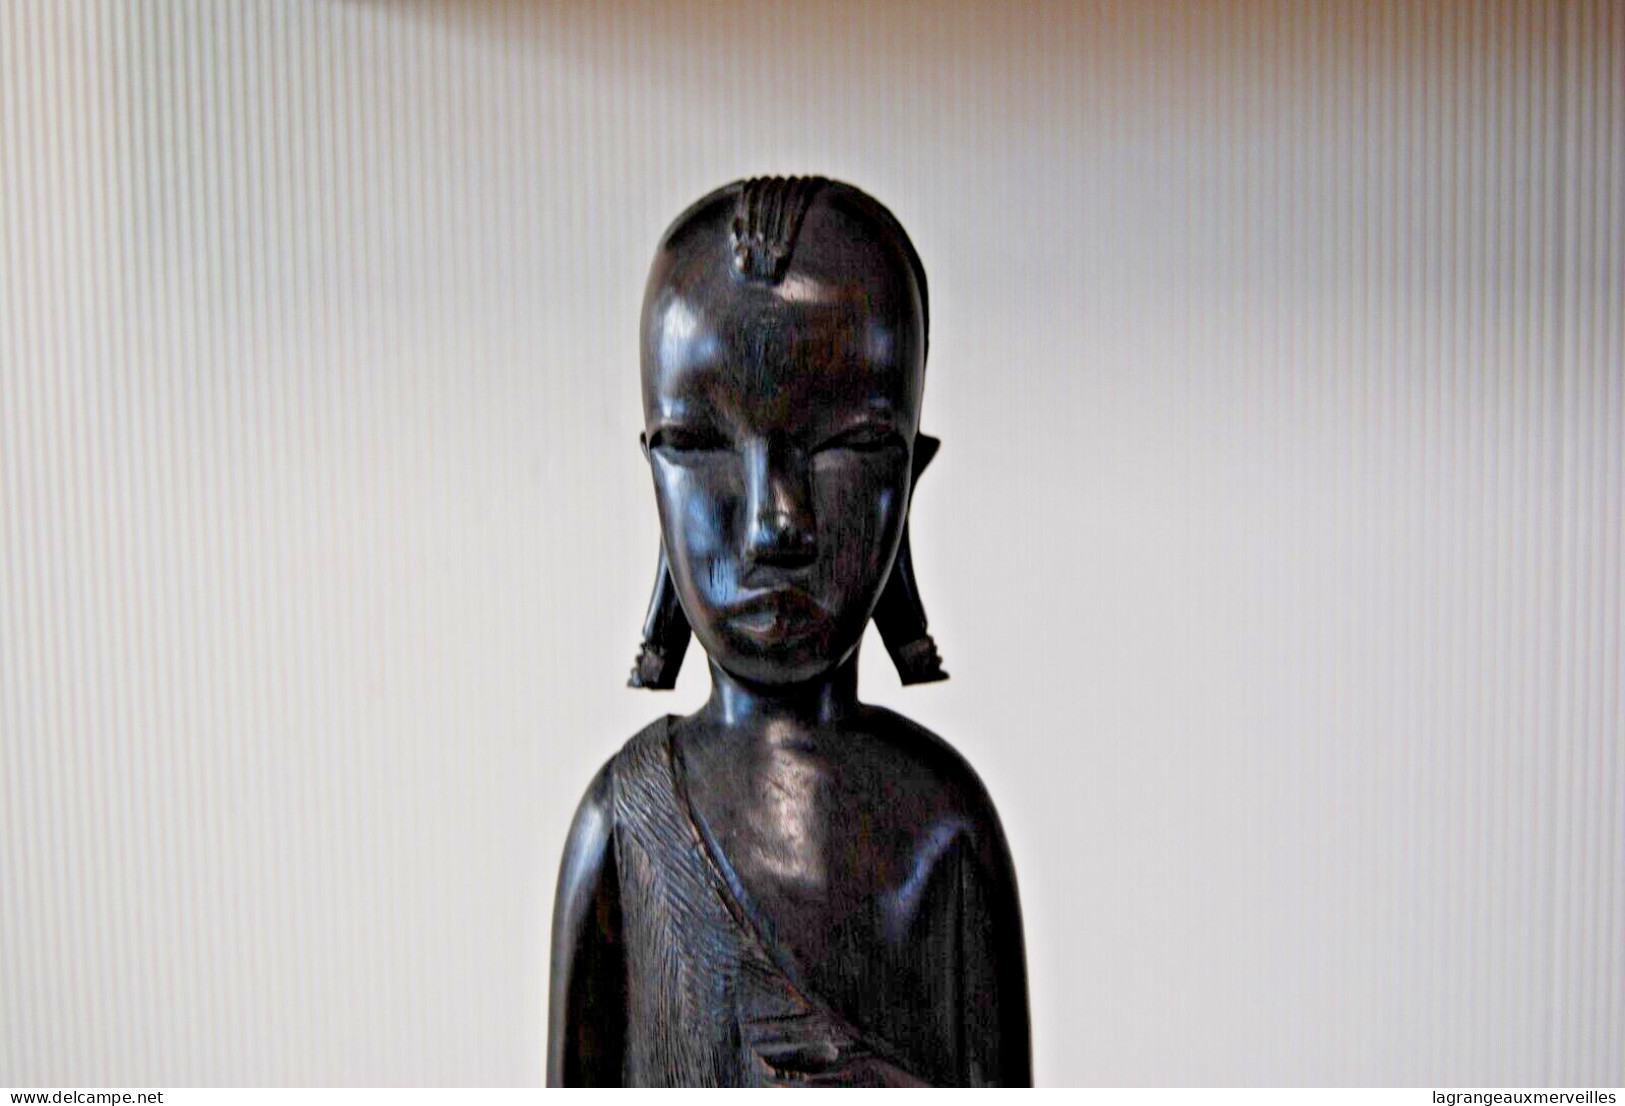 E1 Ancienne masque buste africain - outil ancien - ethnique - tribal H37